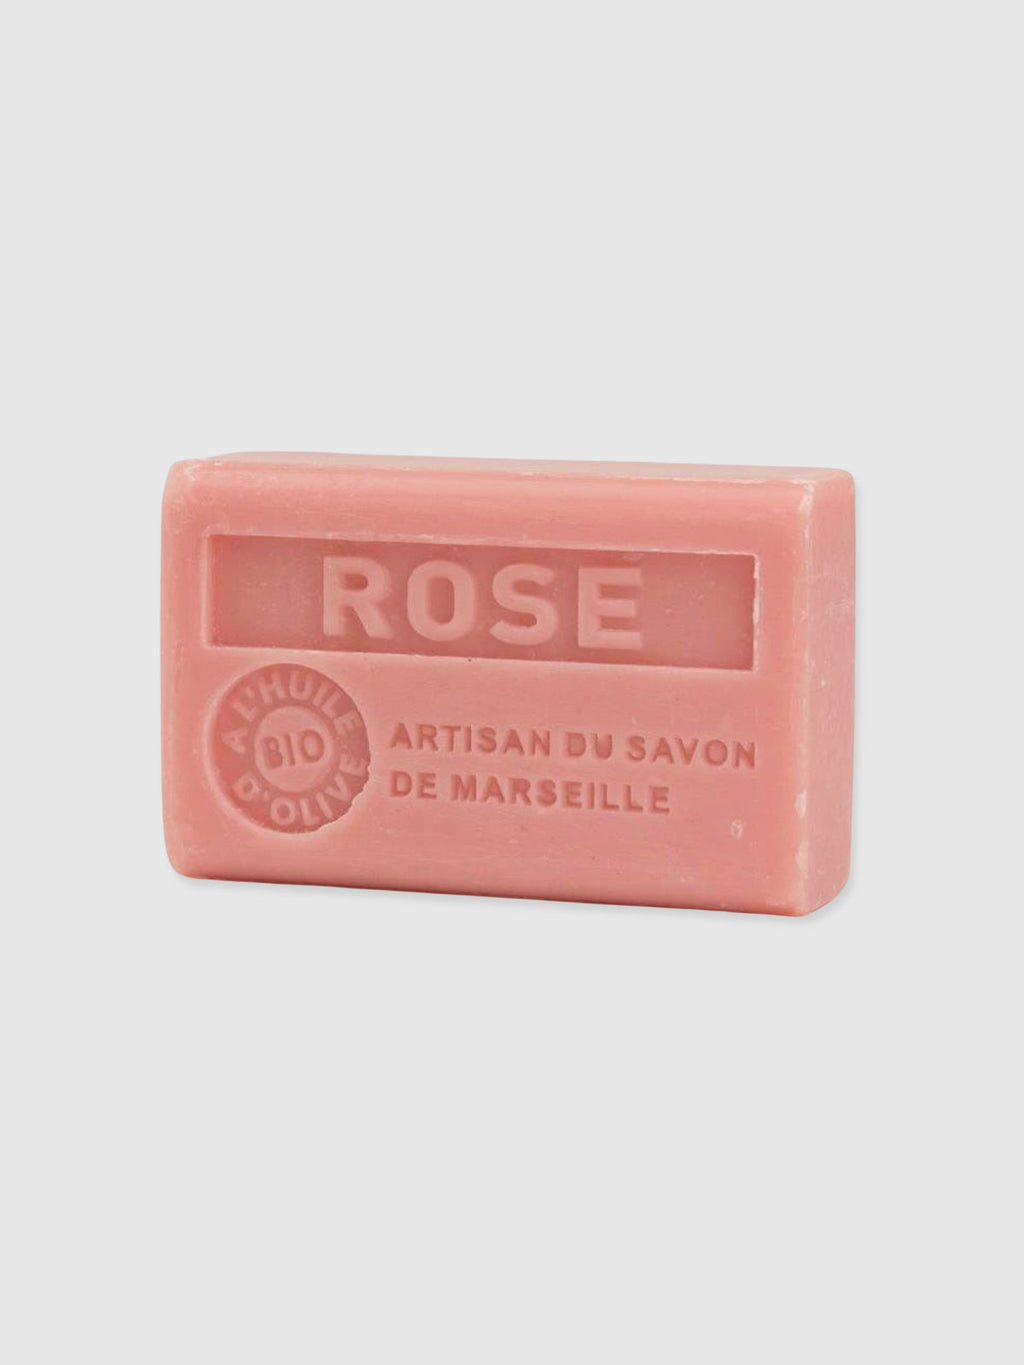 Savon de Marseille French Soap Rose